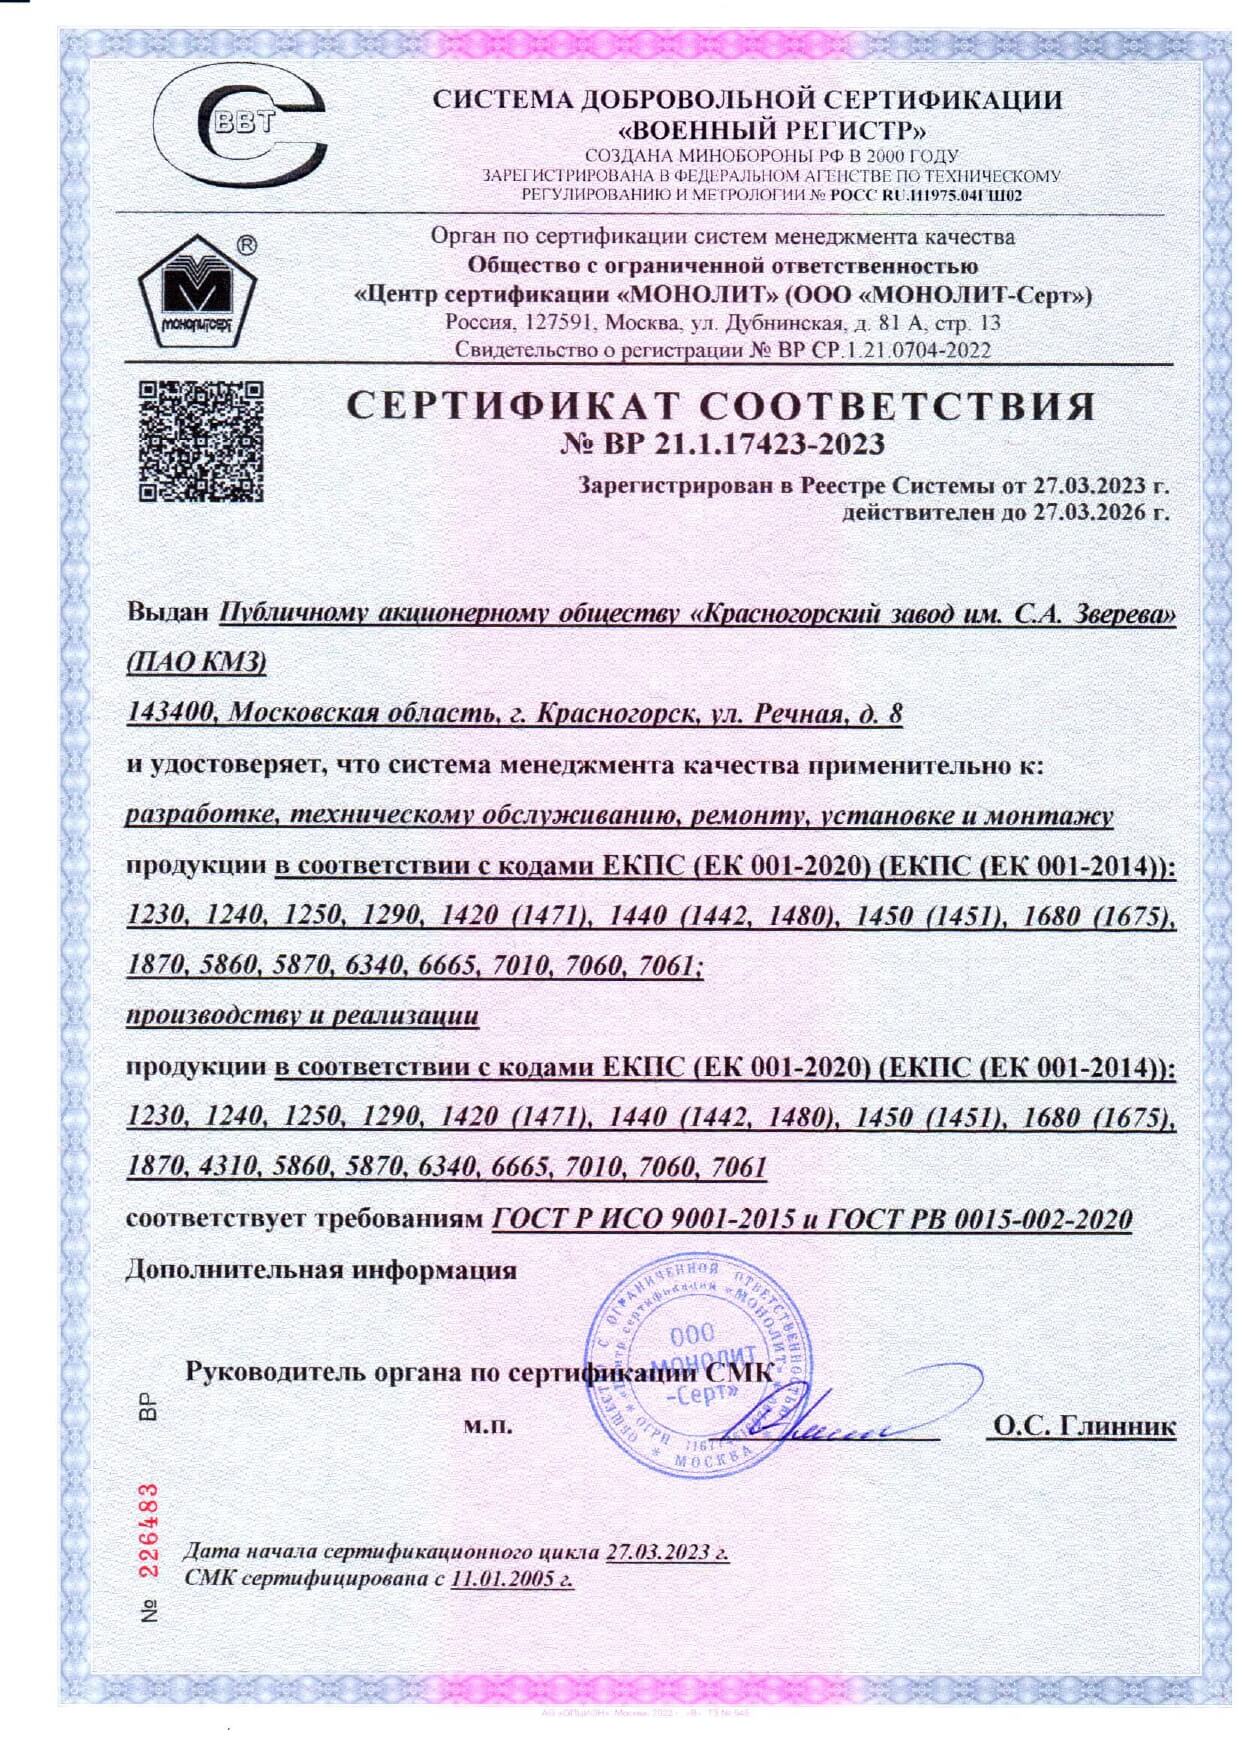 Сертификат ГОСТ РВ 0015-002-2012